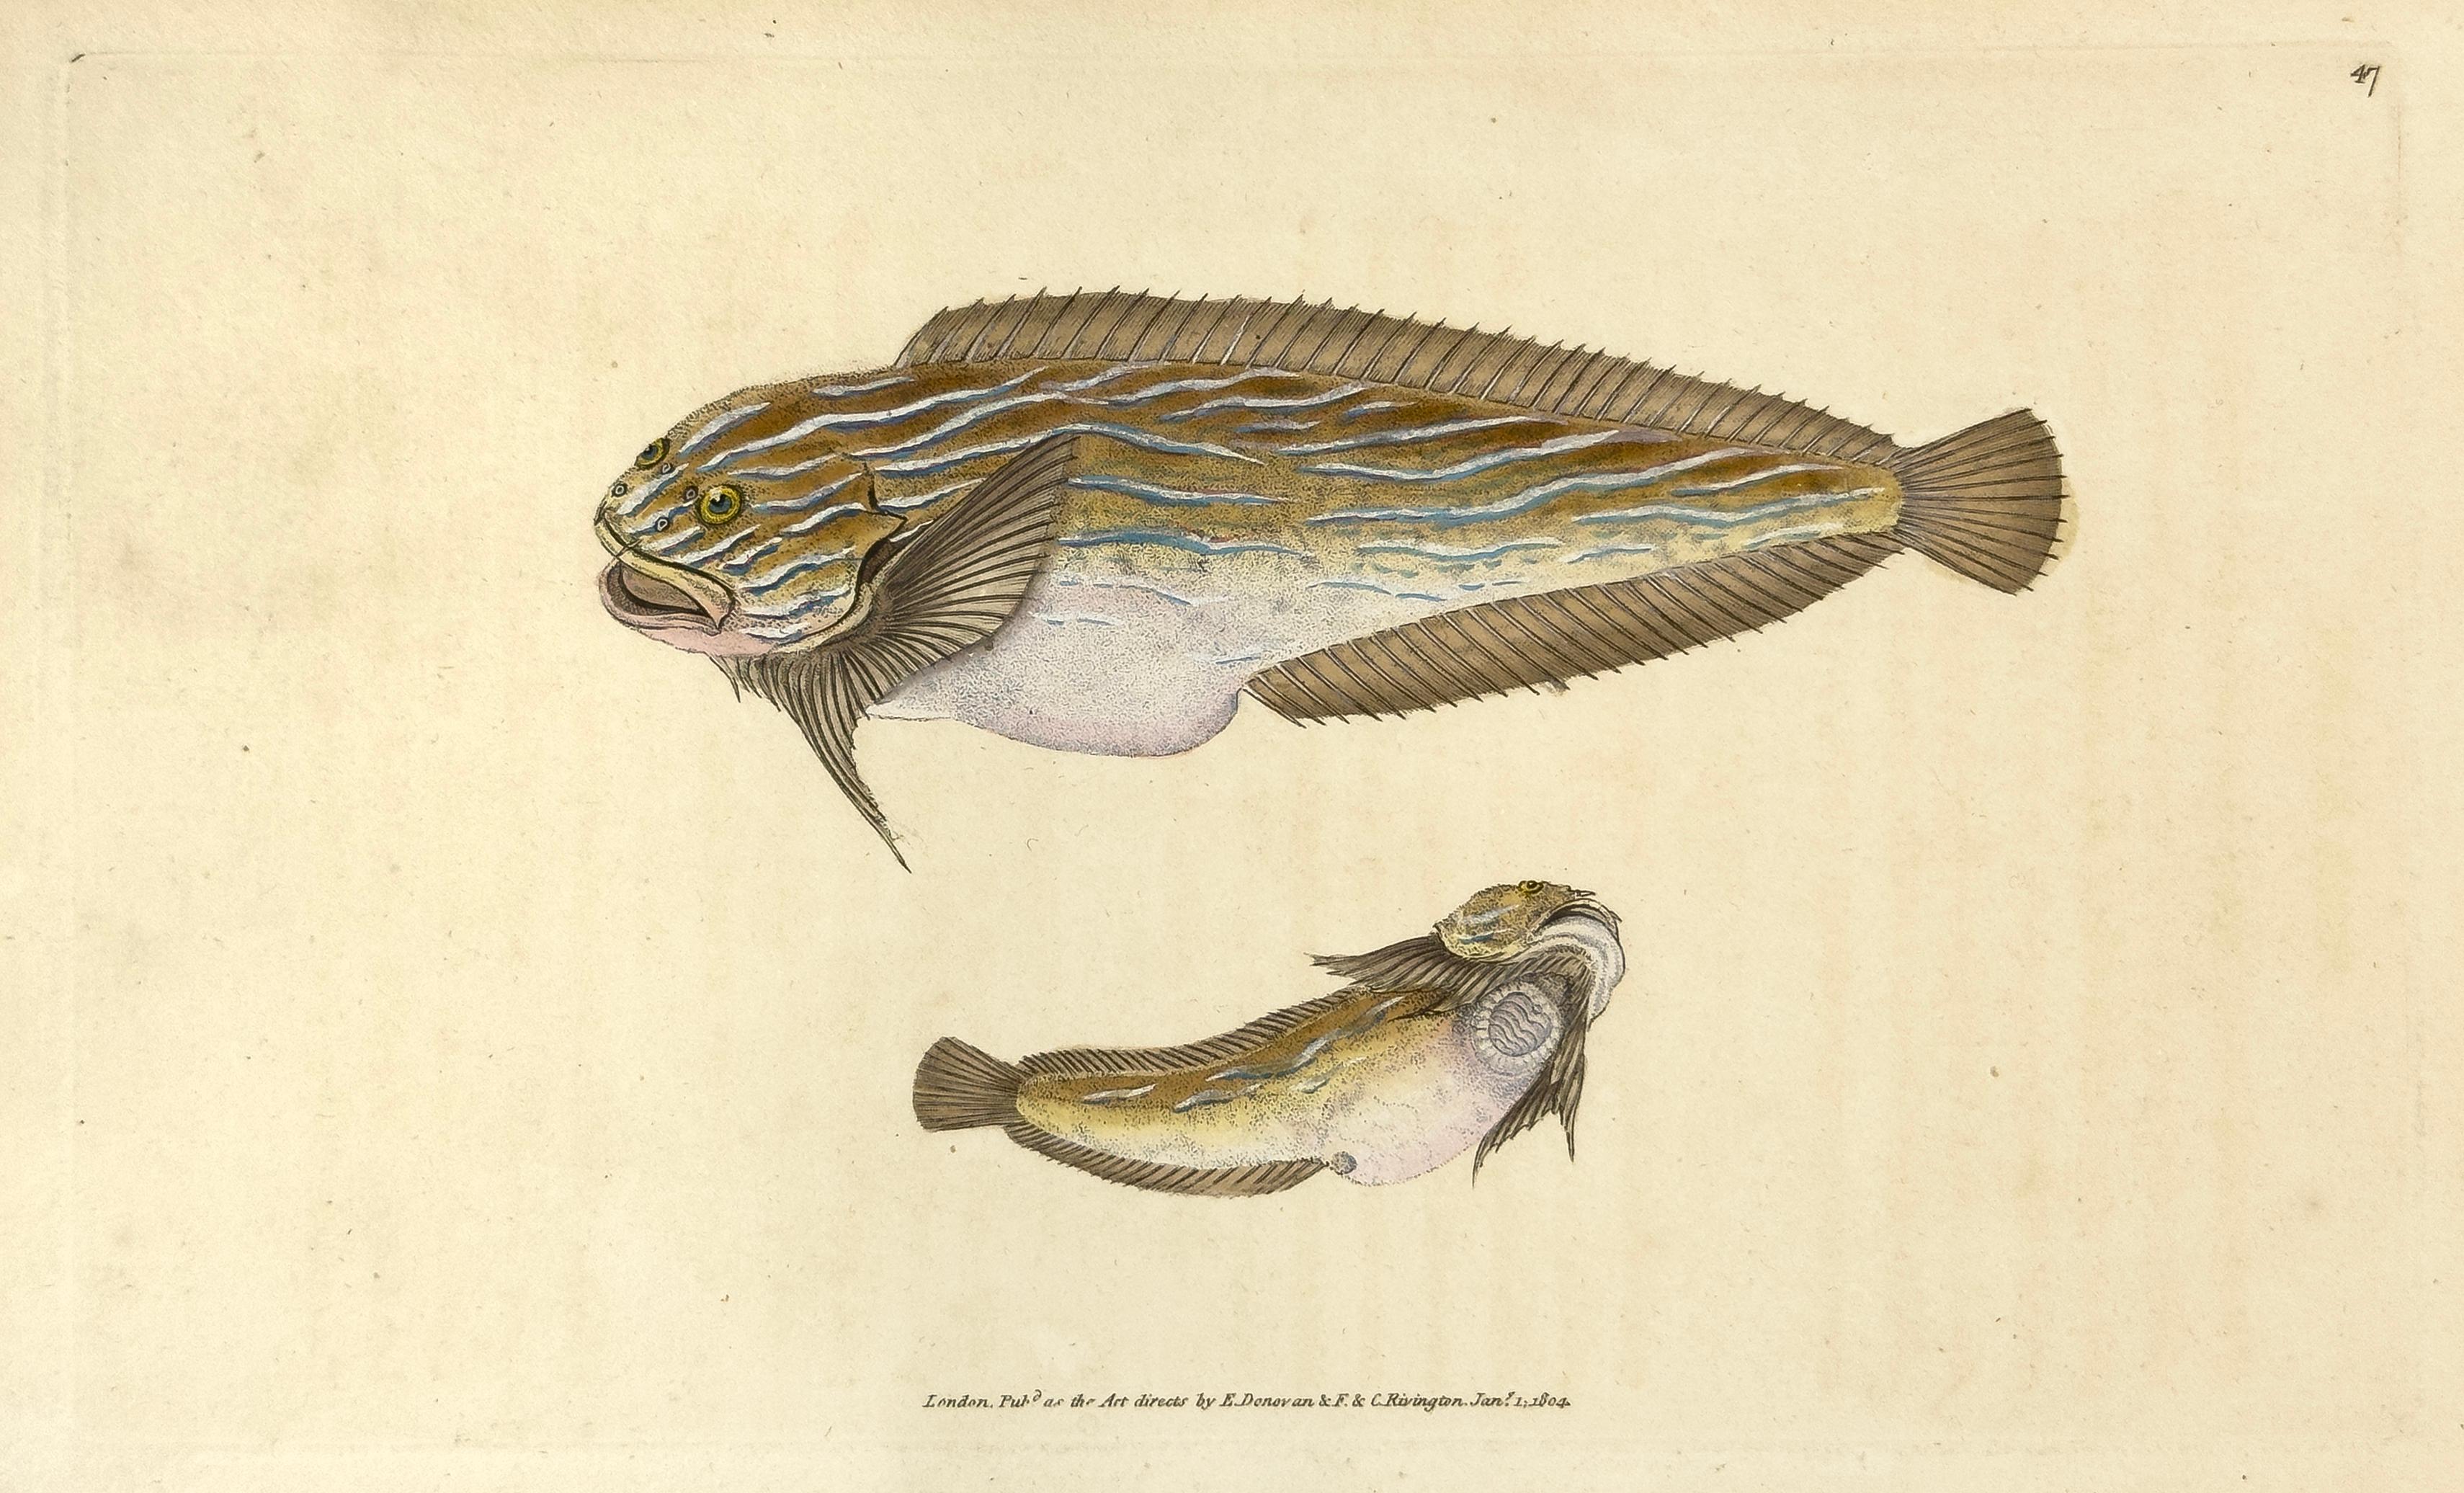 Edward Donovan Print - 47: Cyclopterus liparis, Unctuous Lump-Sucker